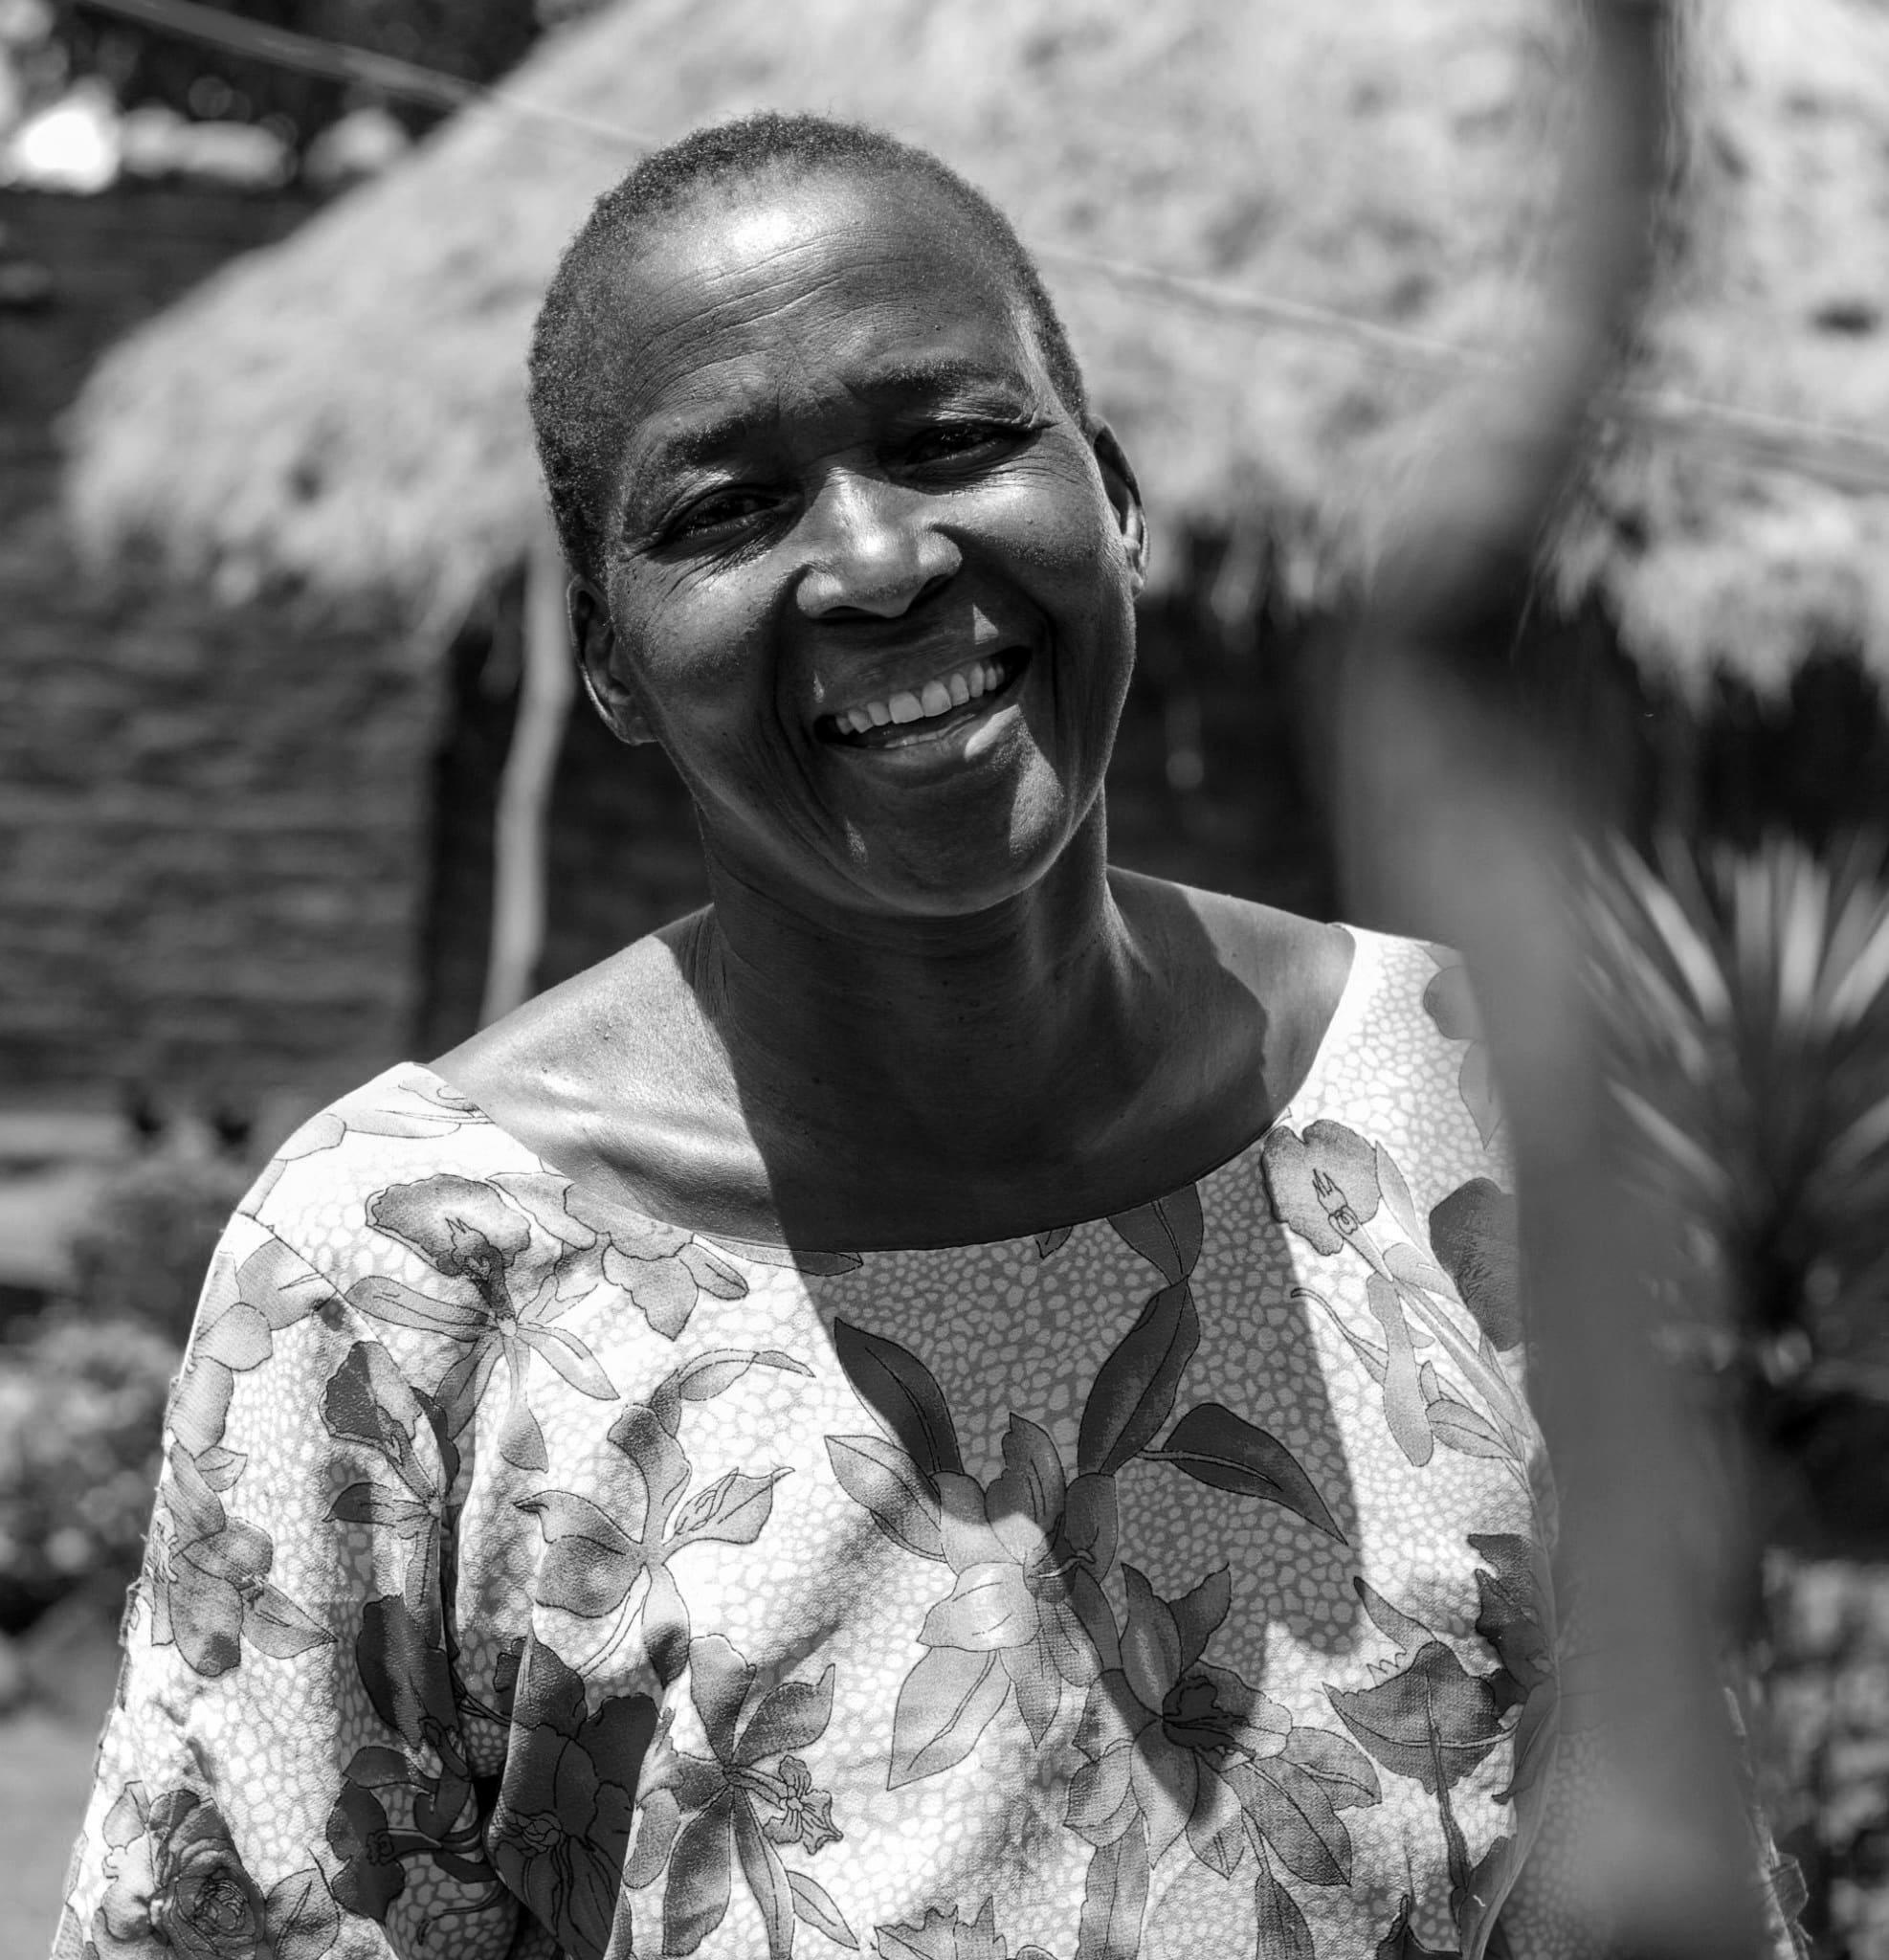 Maria Kisiri is a 44-year-old CHW operating in Serengeti District